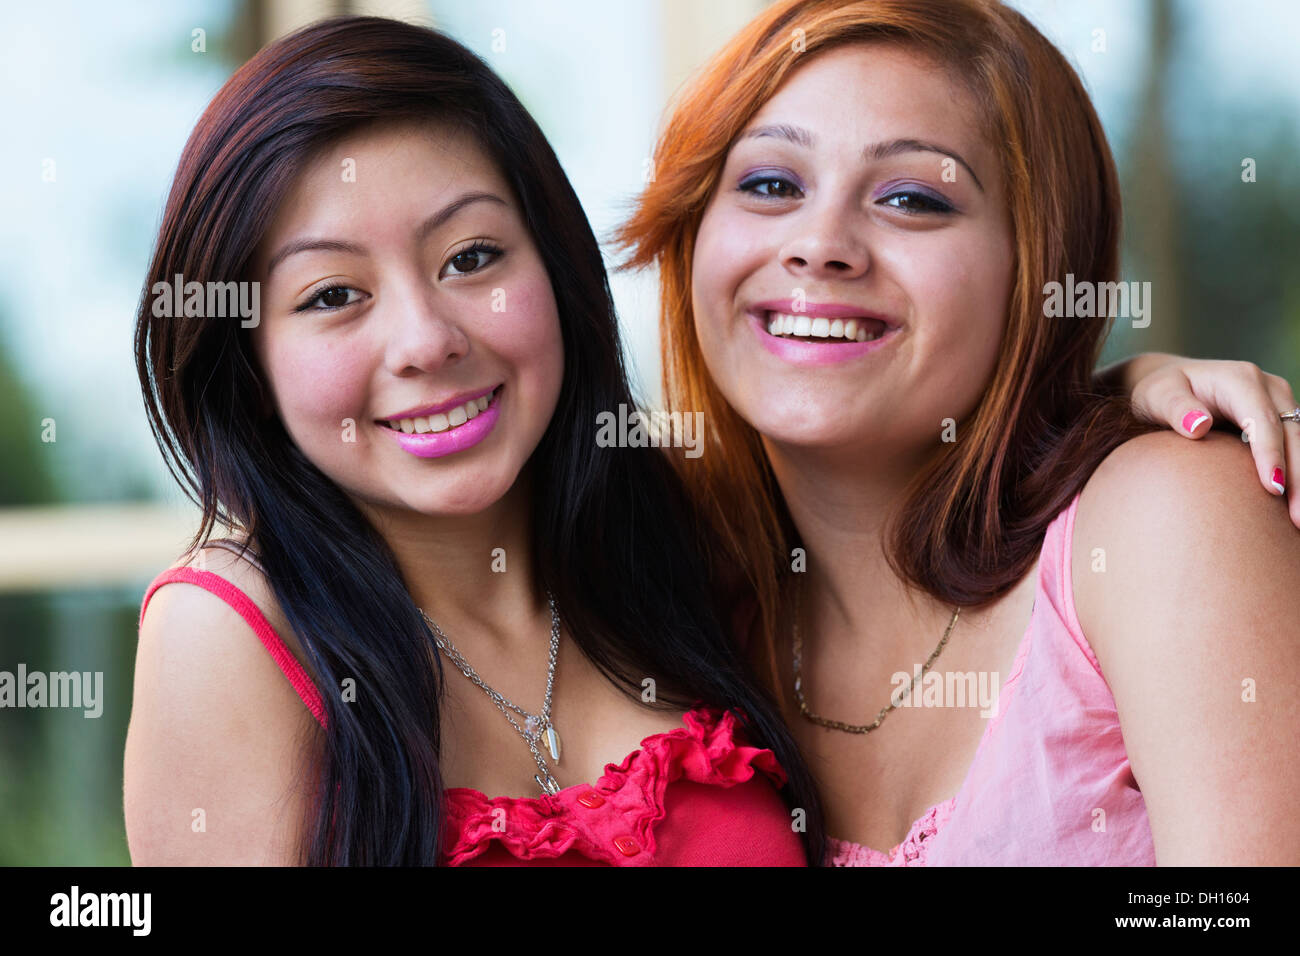 Hispanic girls smiling outdoors Stock Photo